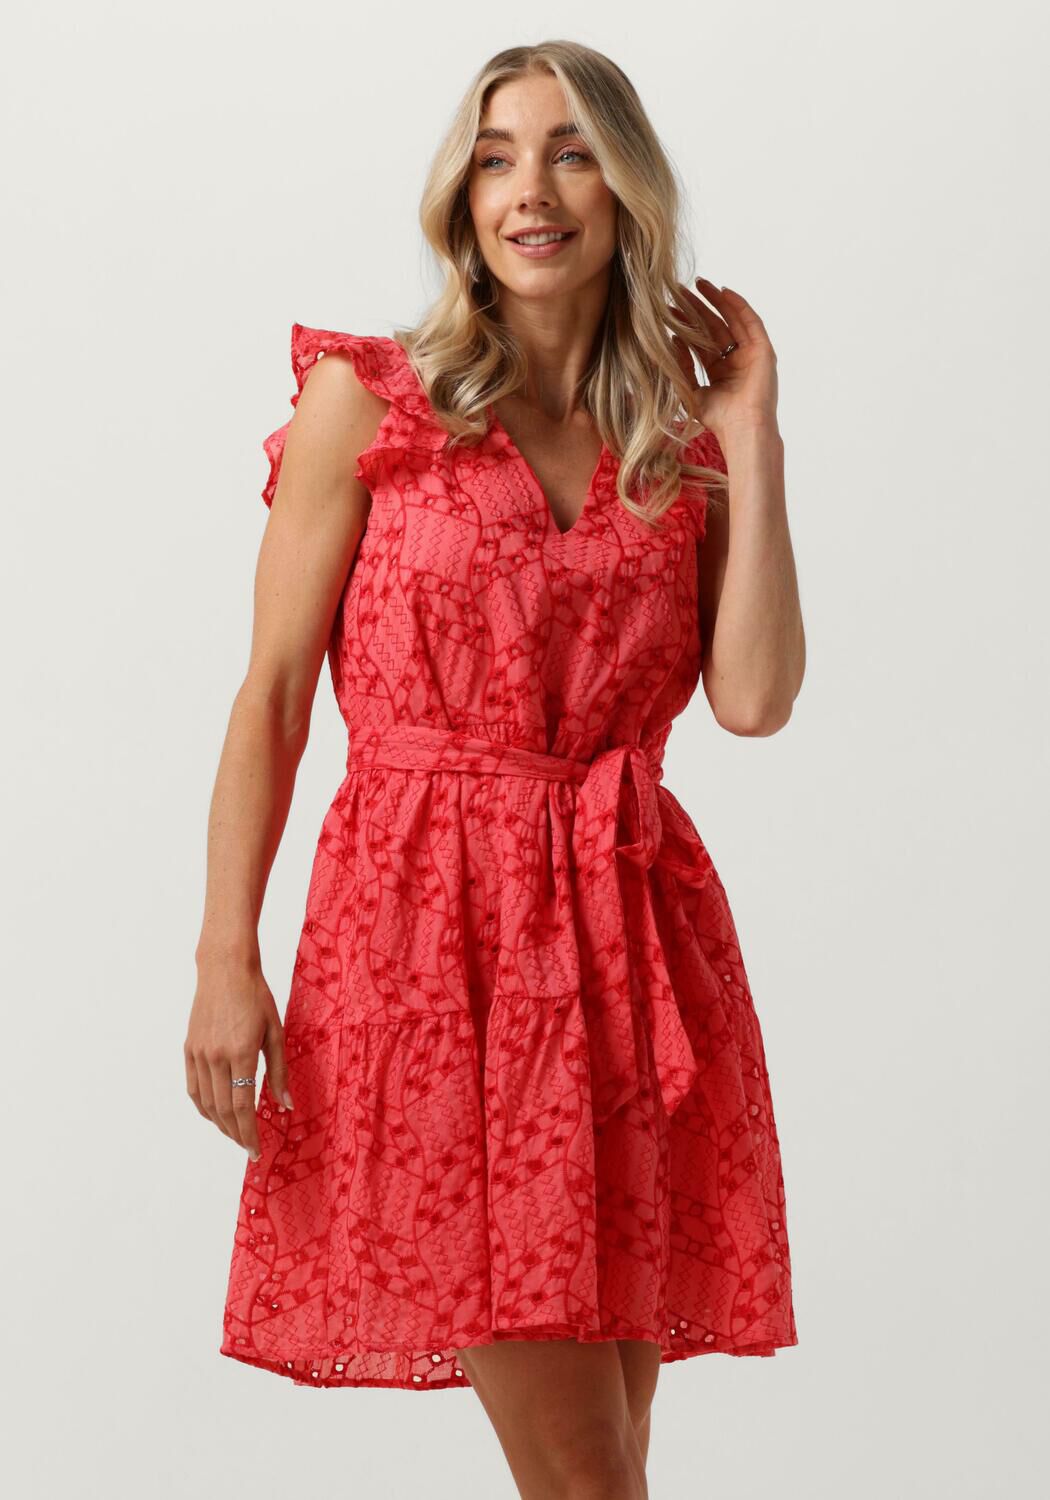 Ydence jurk Adeline met all over print en borduursels roze rood